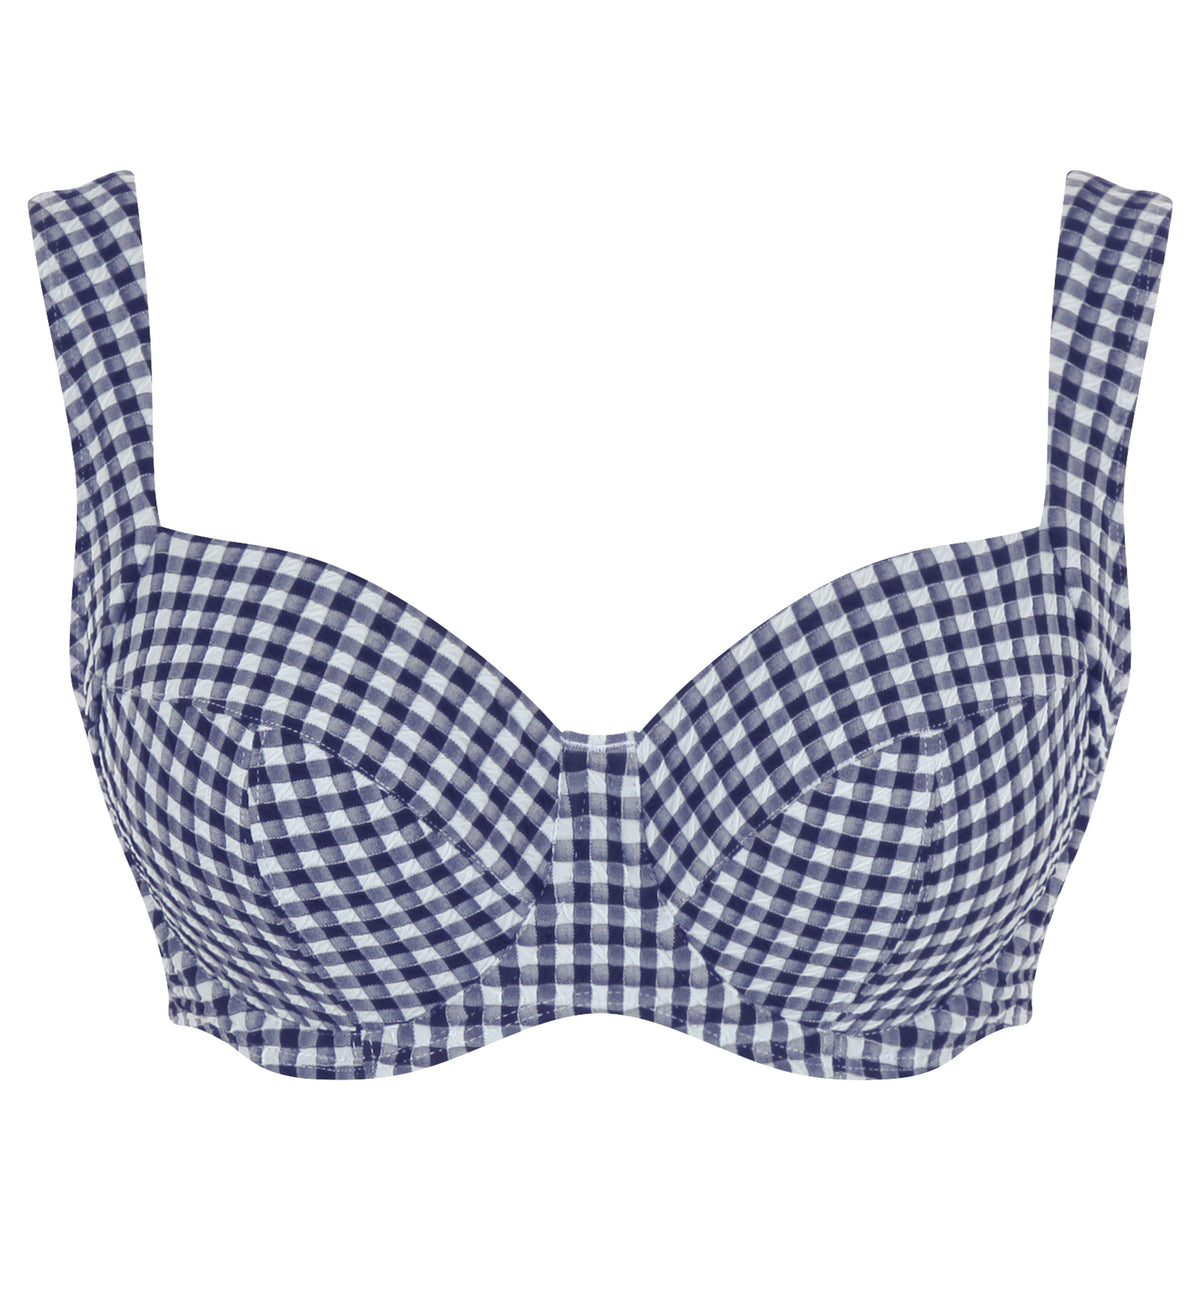 Panache Olivia Full Cup Underwire Bikini Top (SW1722),30G,Navy Gingham - Navy Gingham,30G